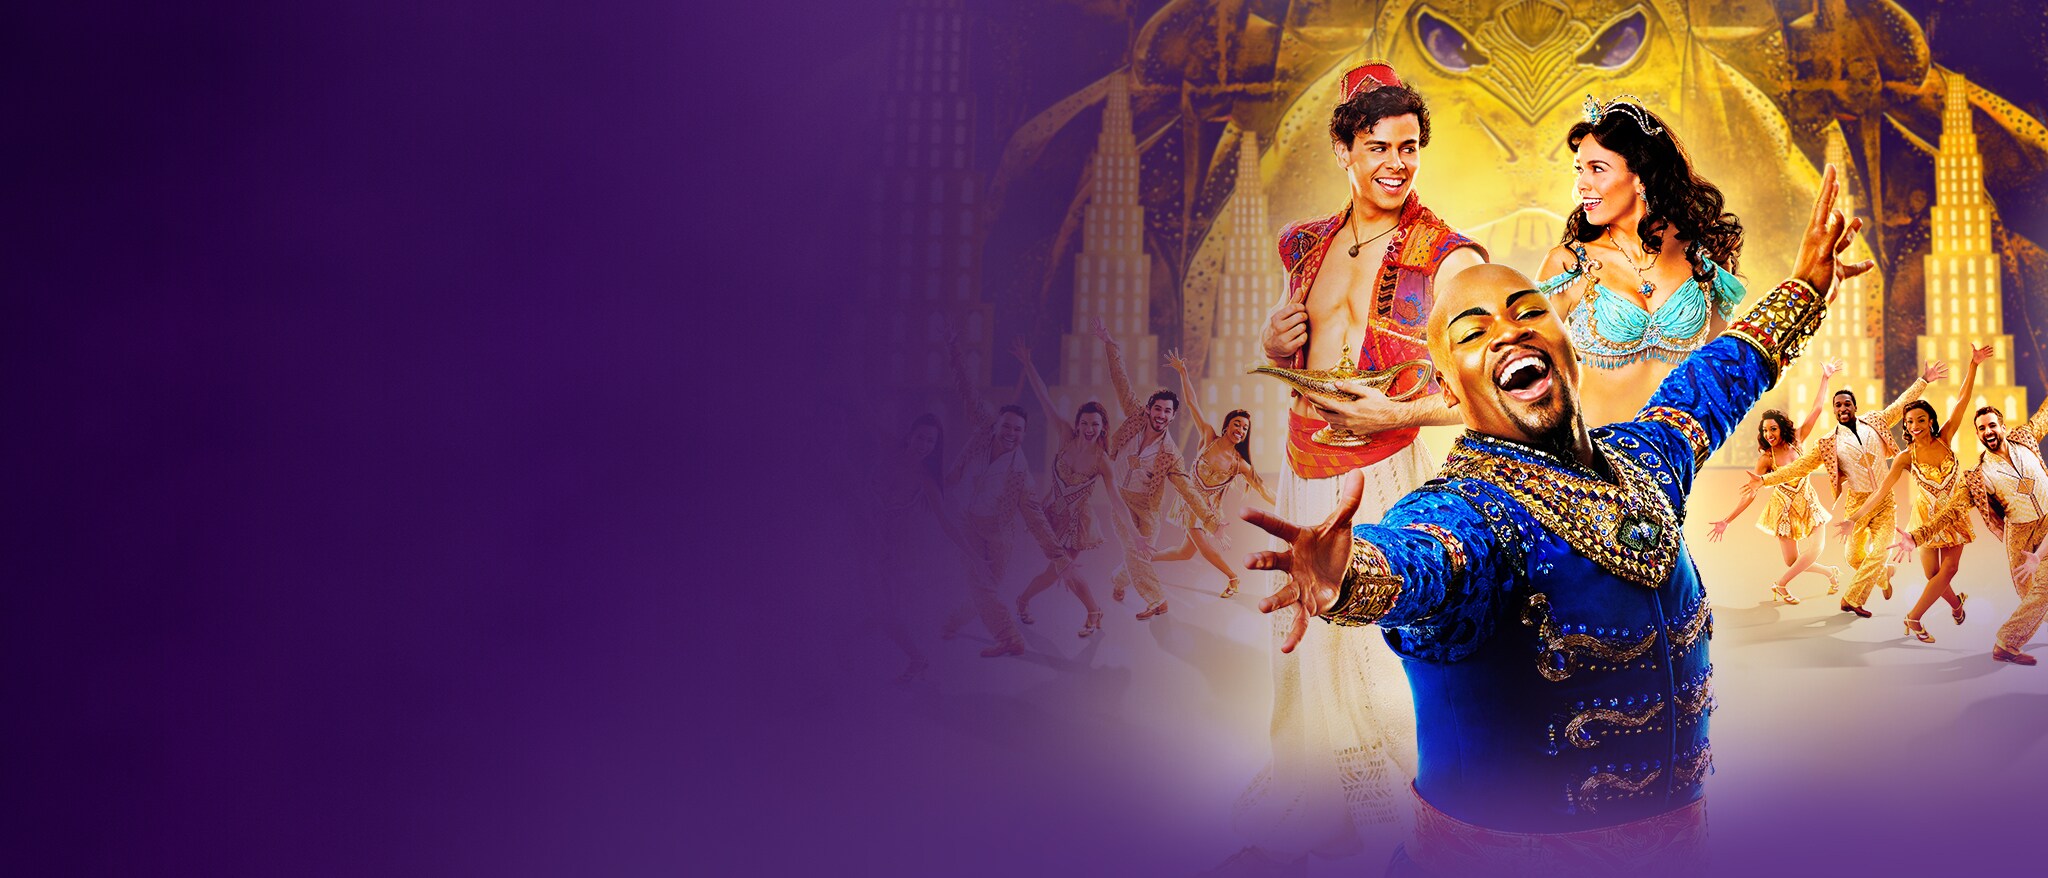 Aladdin on Broadway - Live Shows landing page - EMEA banner